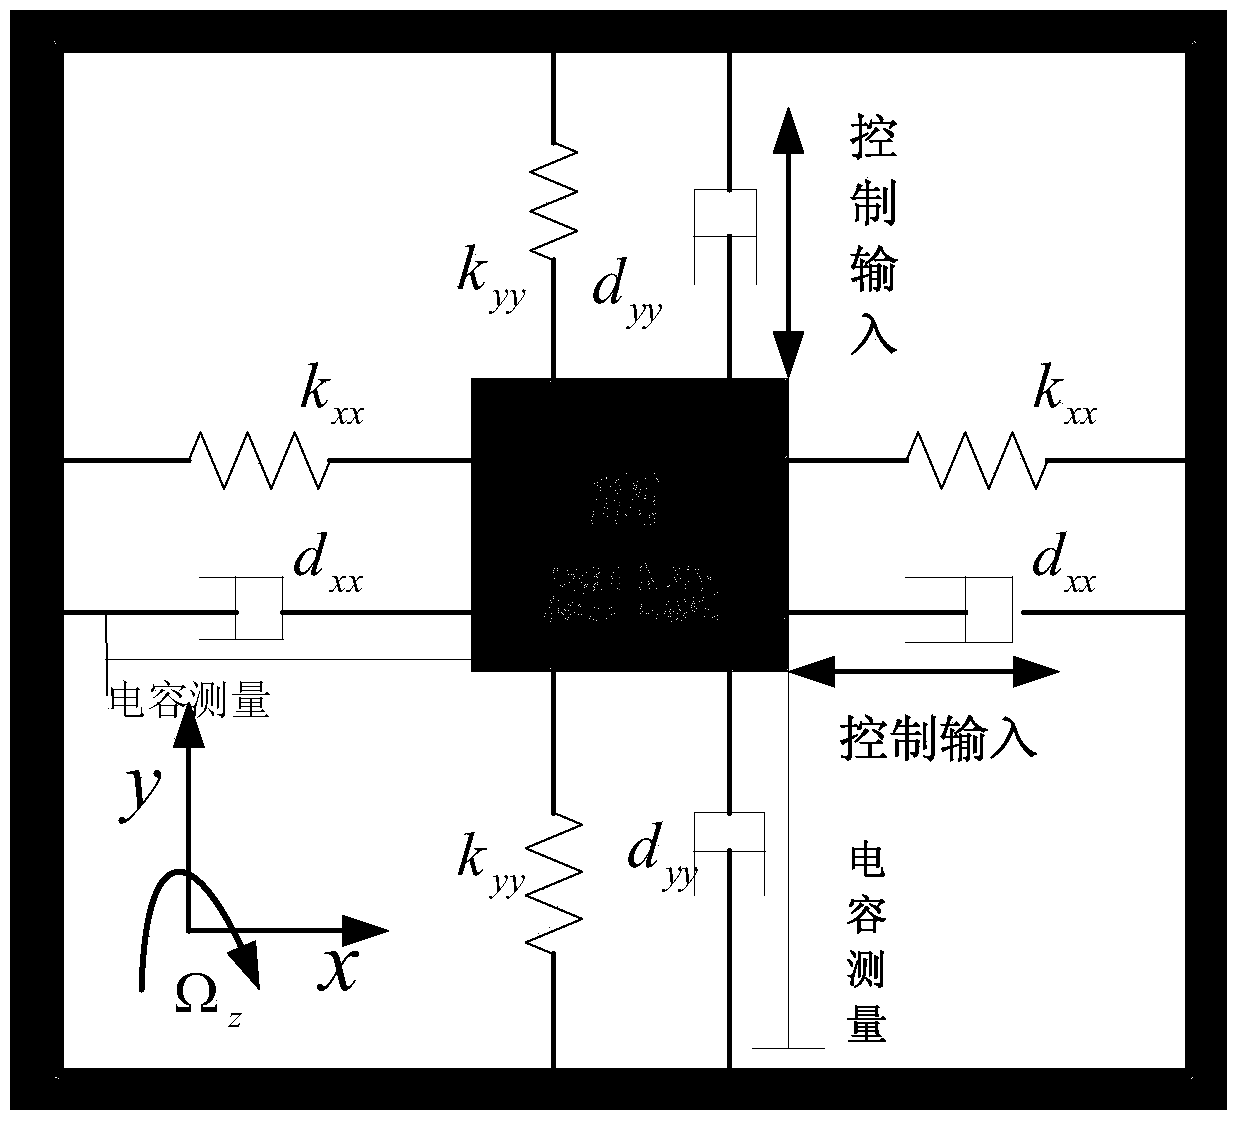 Adaptive inversion nonsingular terminal sliding mode control method of micro gyroscope